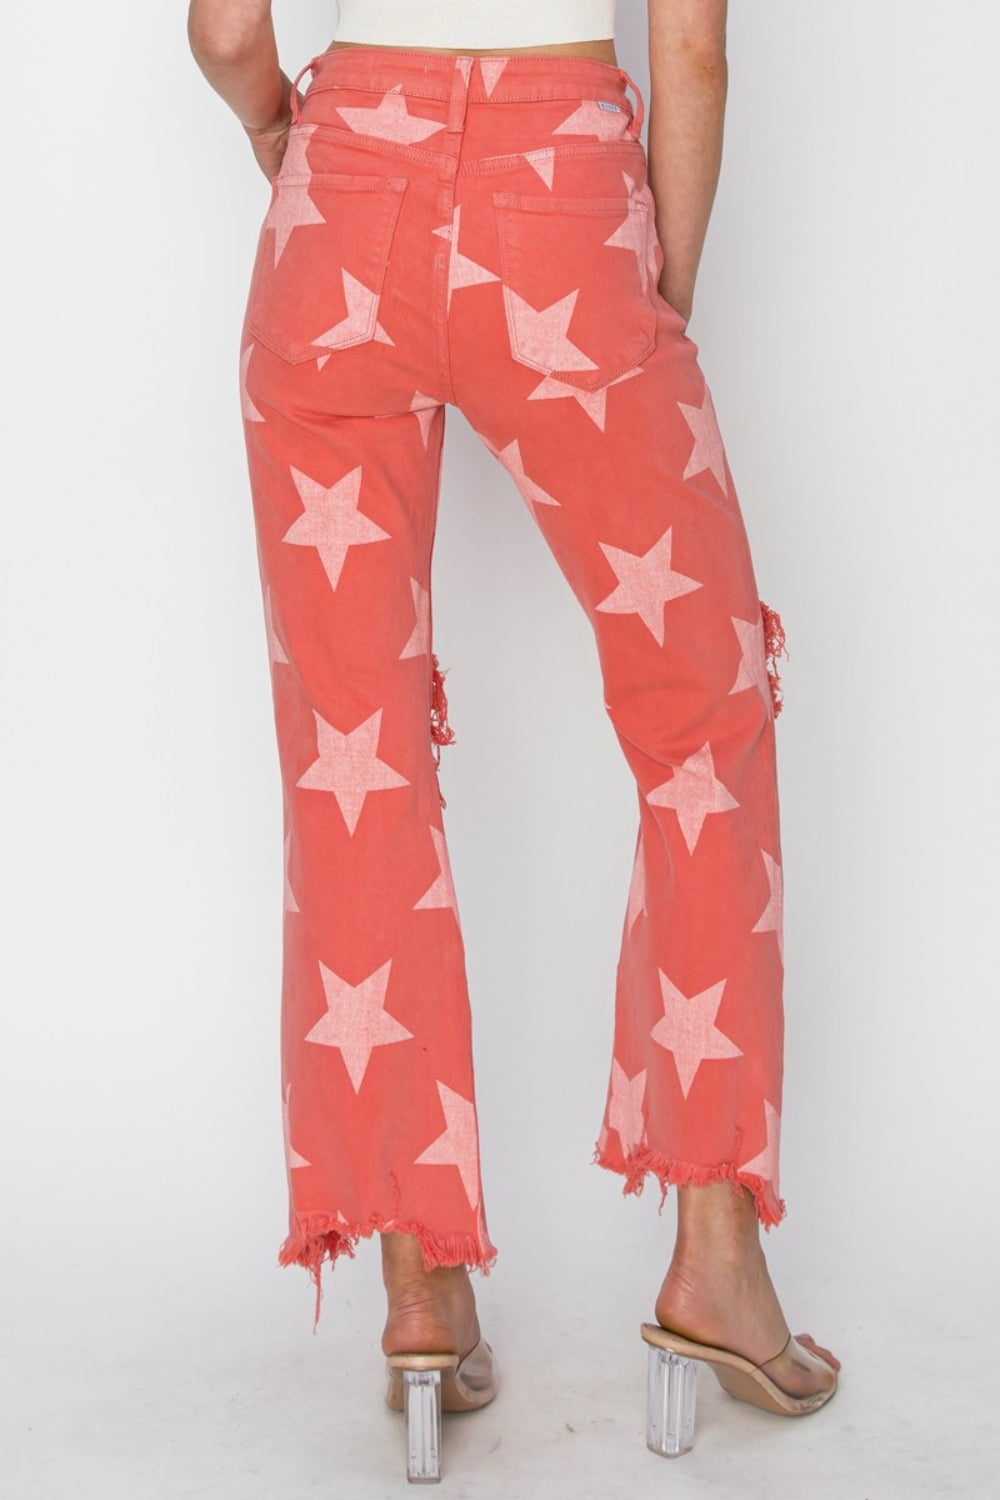 RISEN Star Pattern Jeans in Peach Blossom